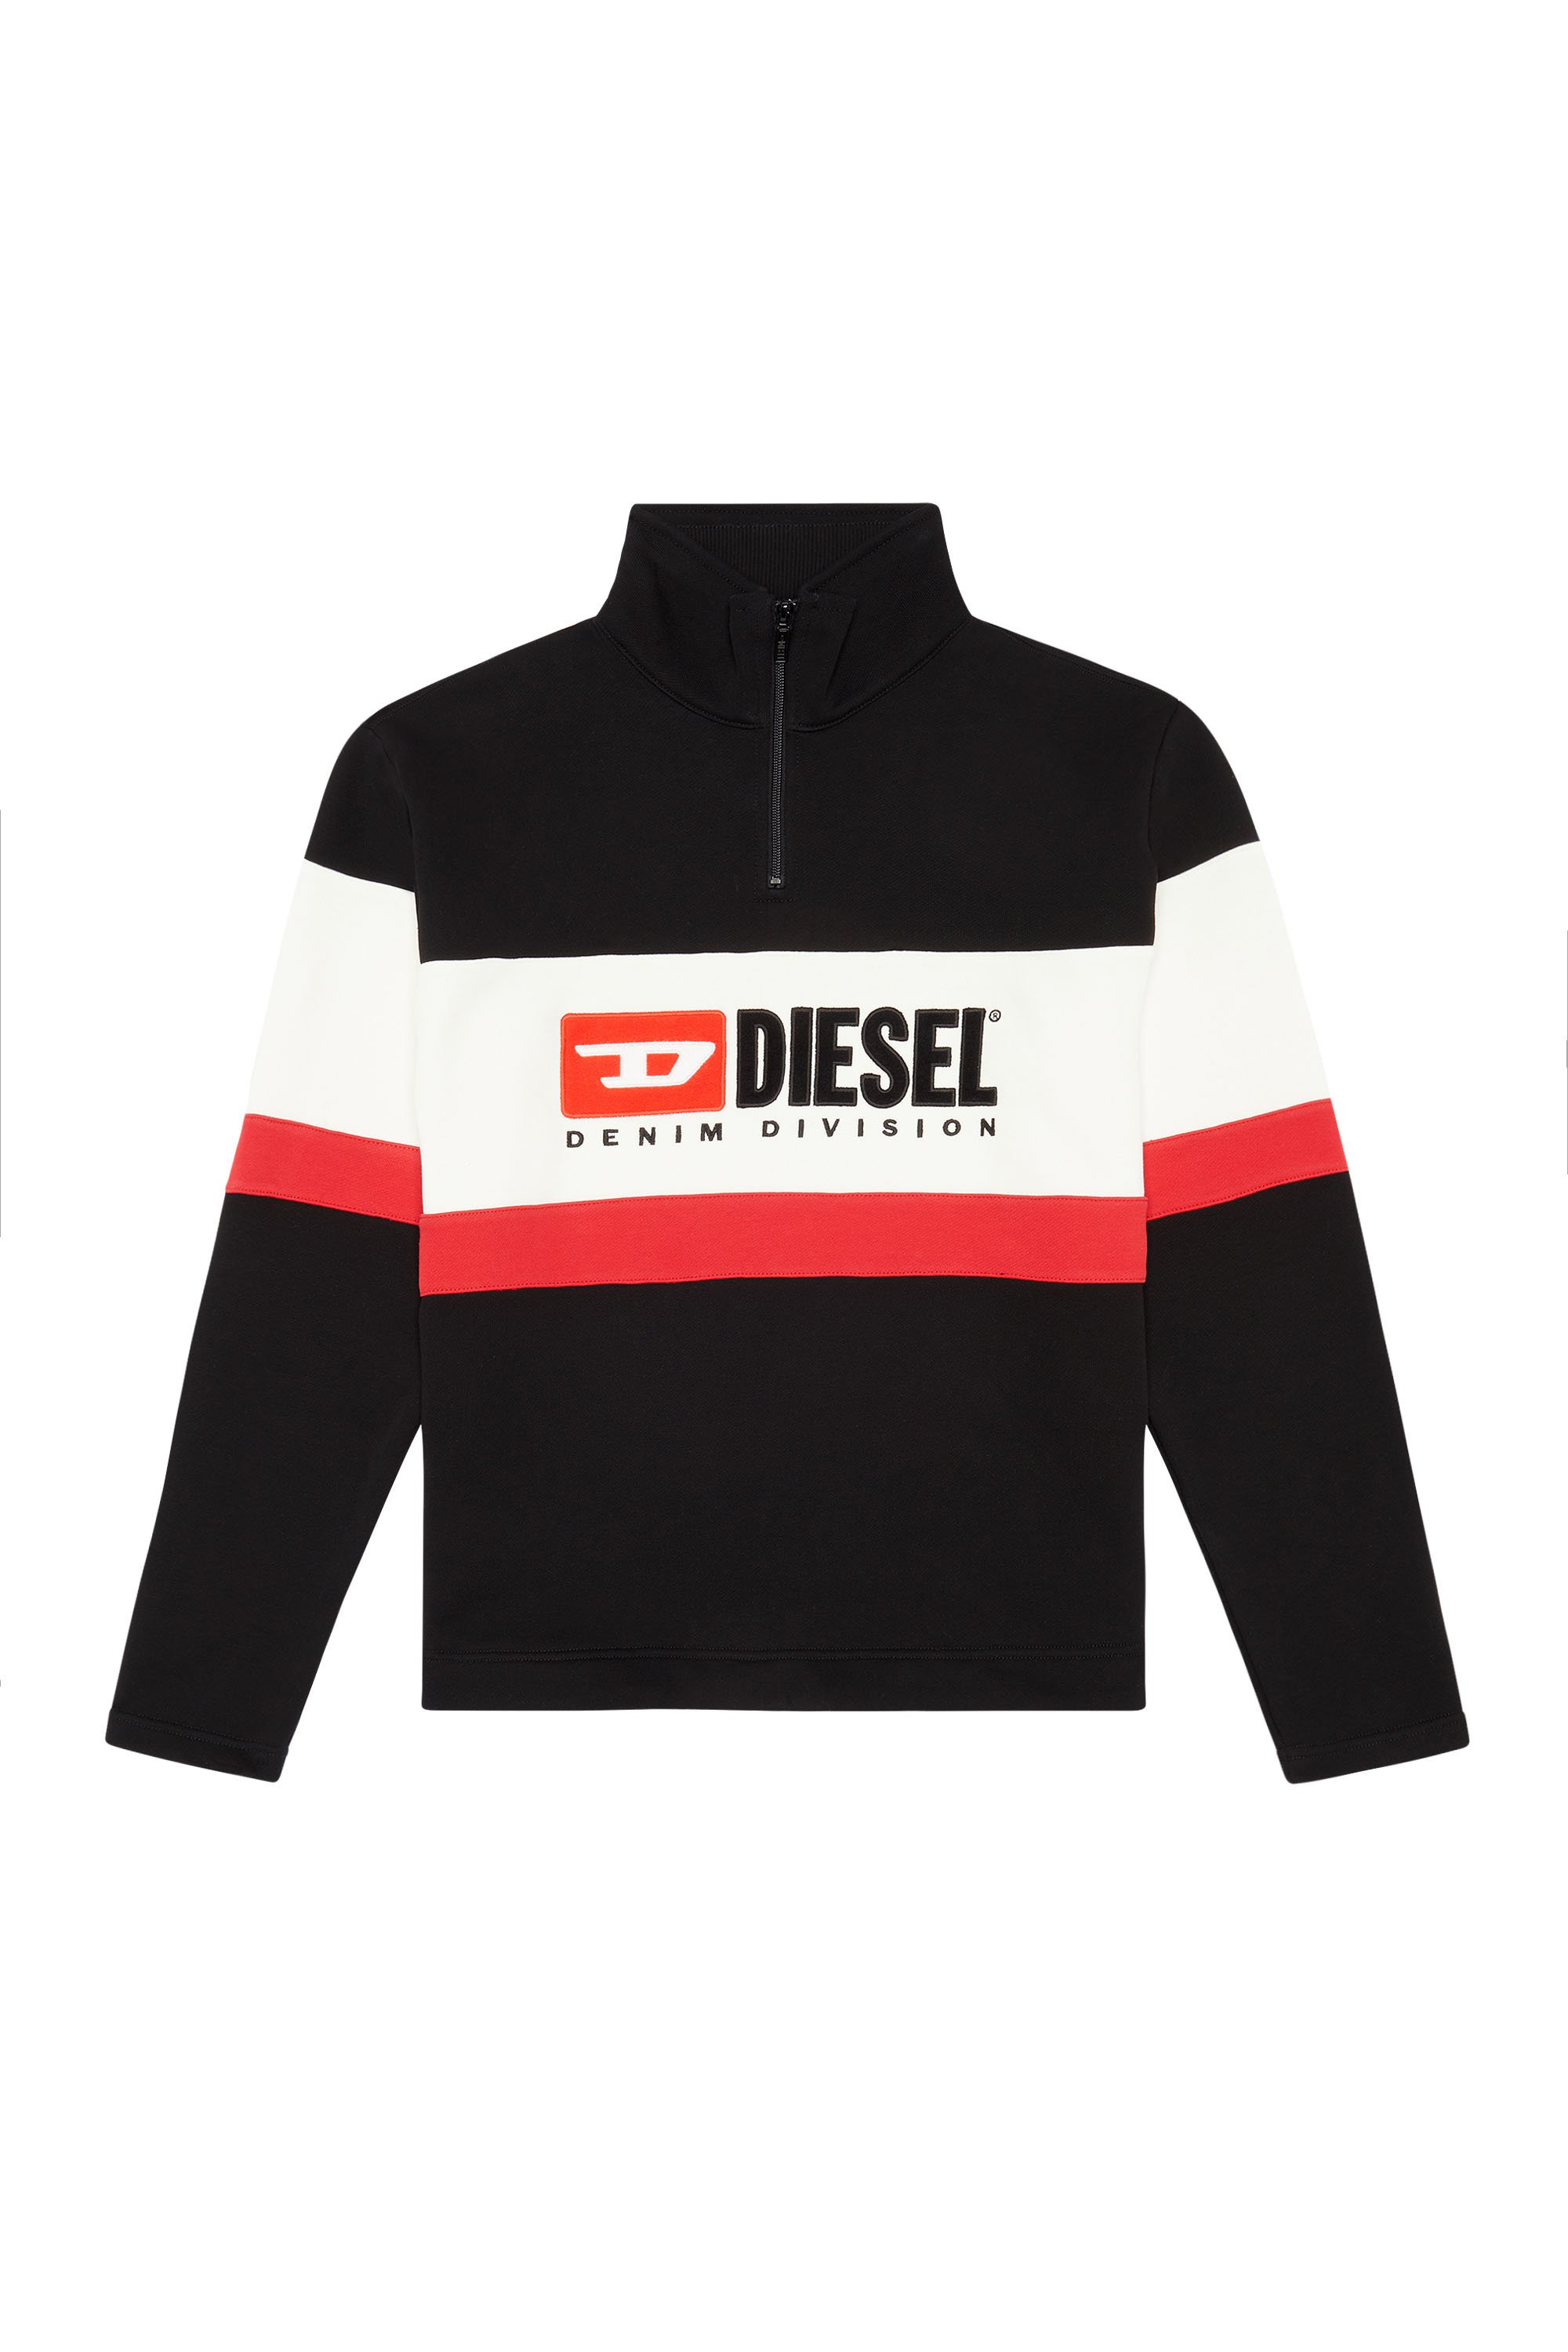 Diesel - S-SAINT-DIVISION, Black - Image 5